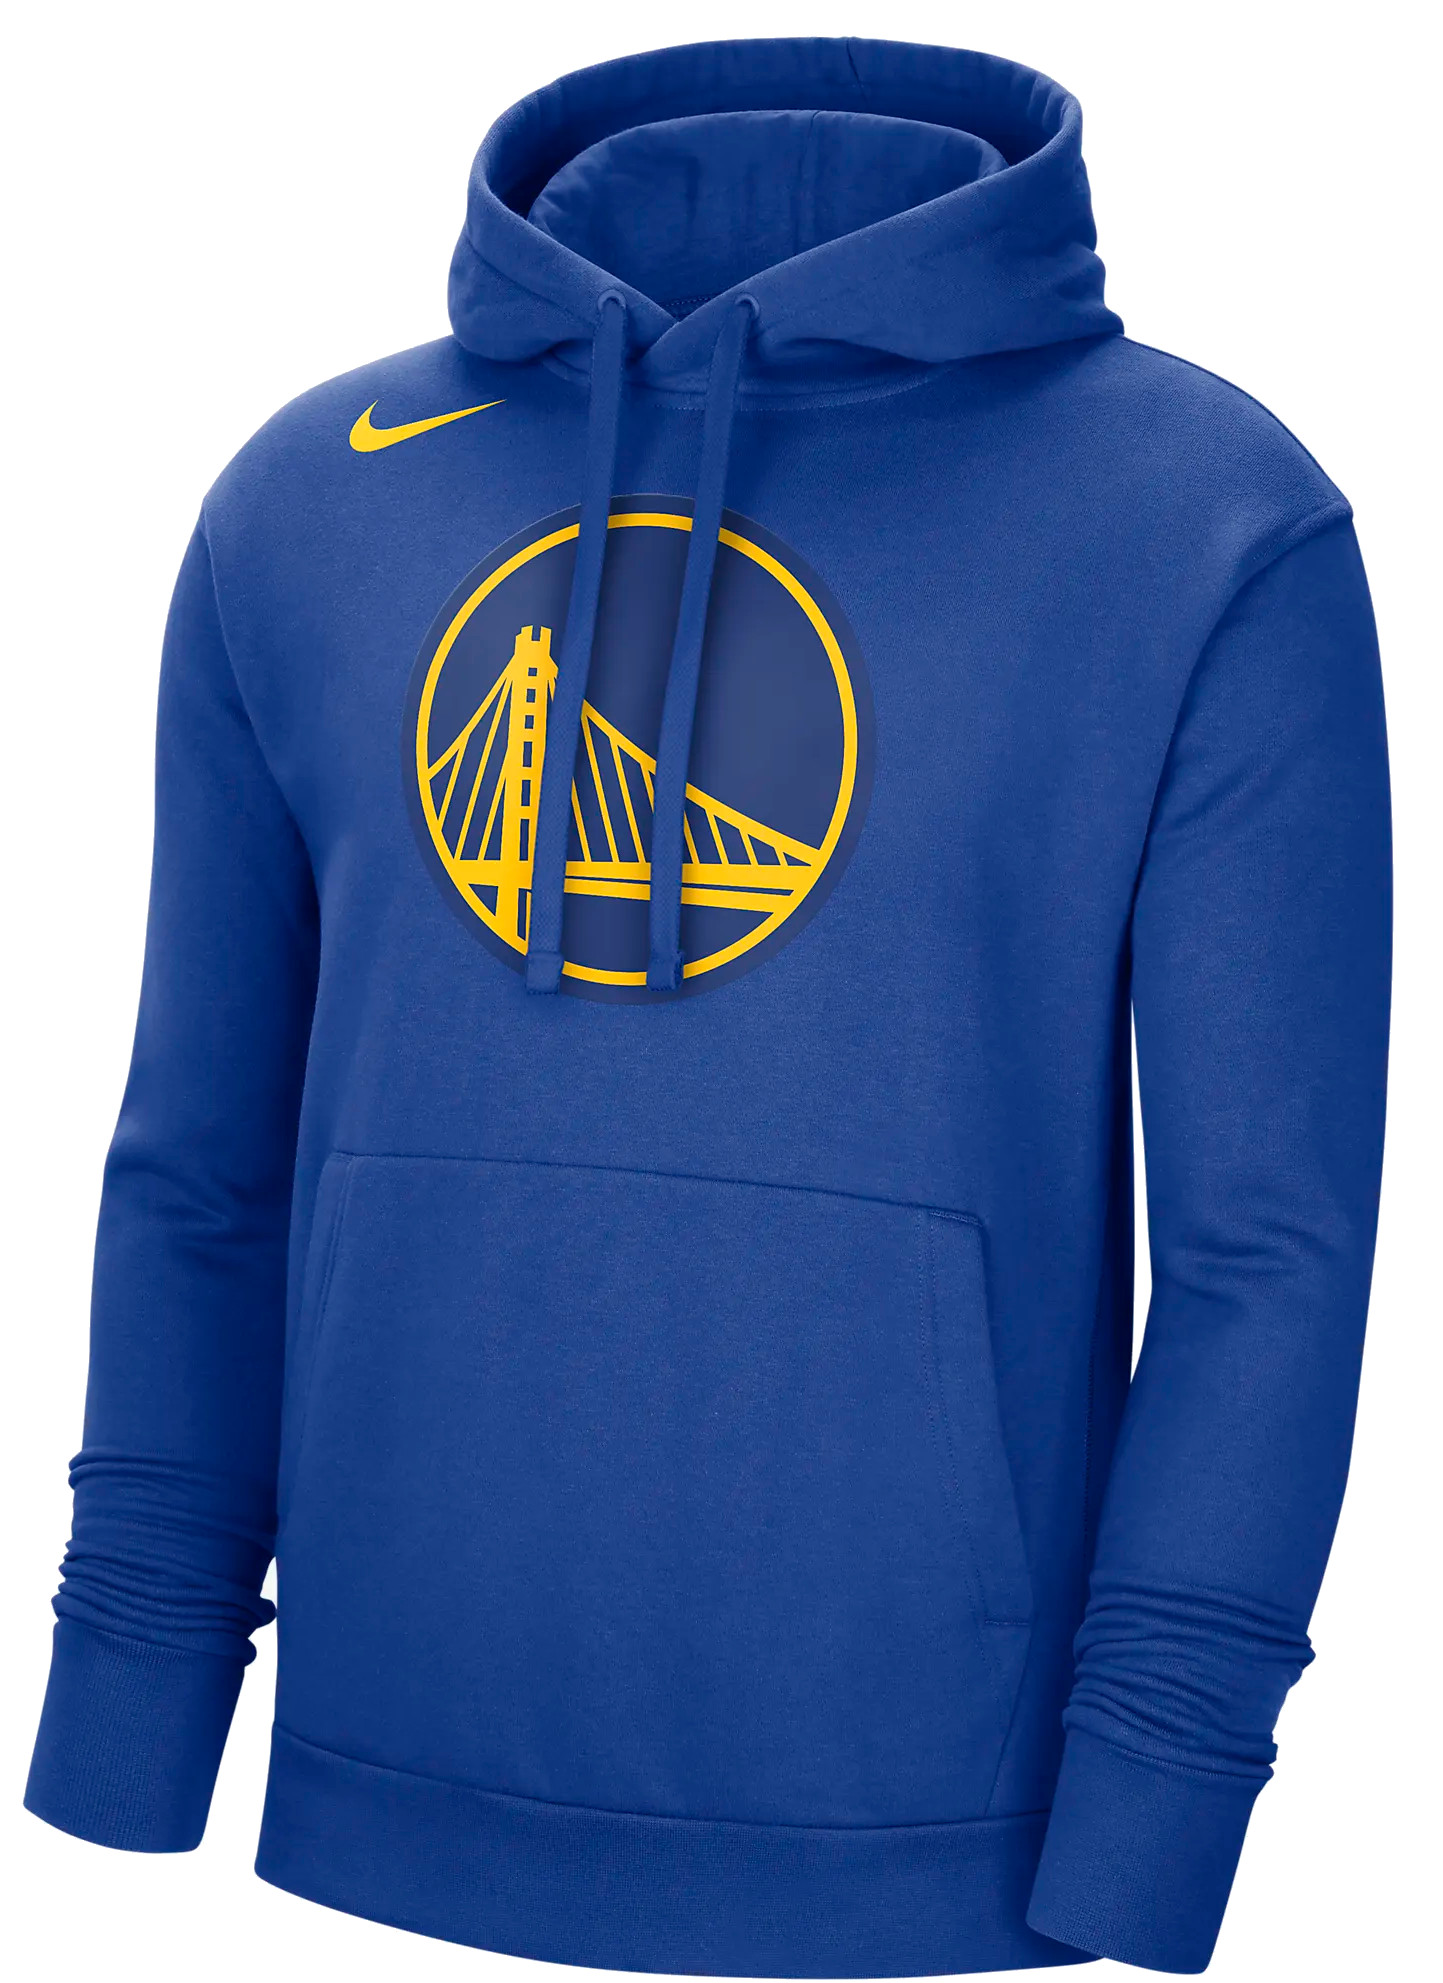 Sweatshirt com capuz Nike NBA Golden State Warriors